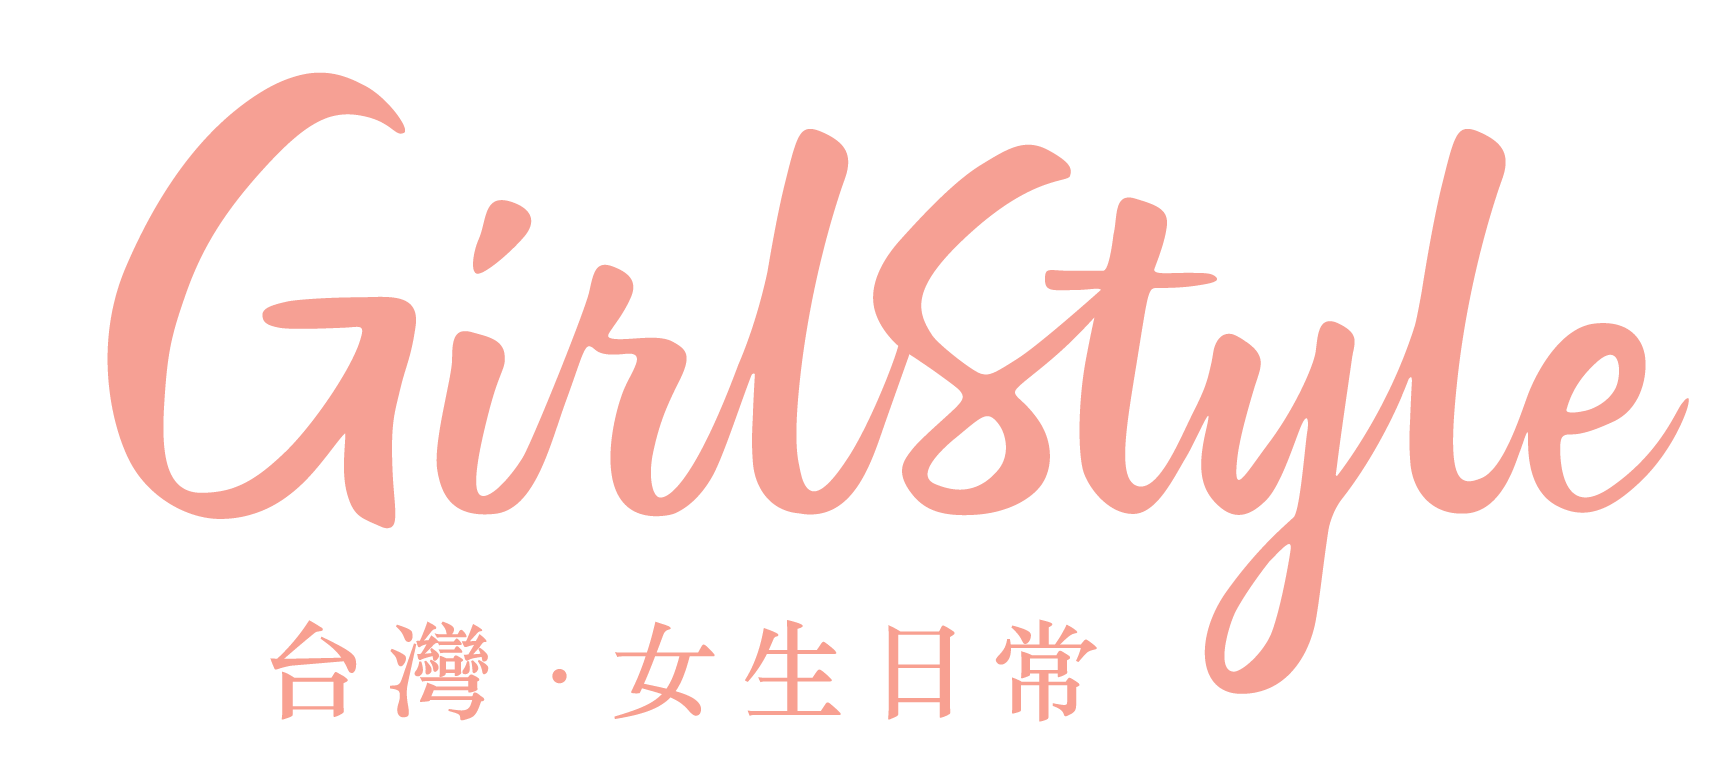 Girls_style_logo